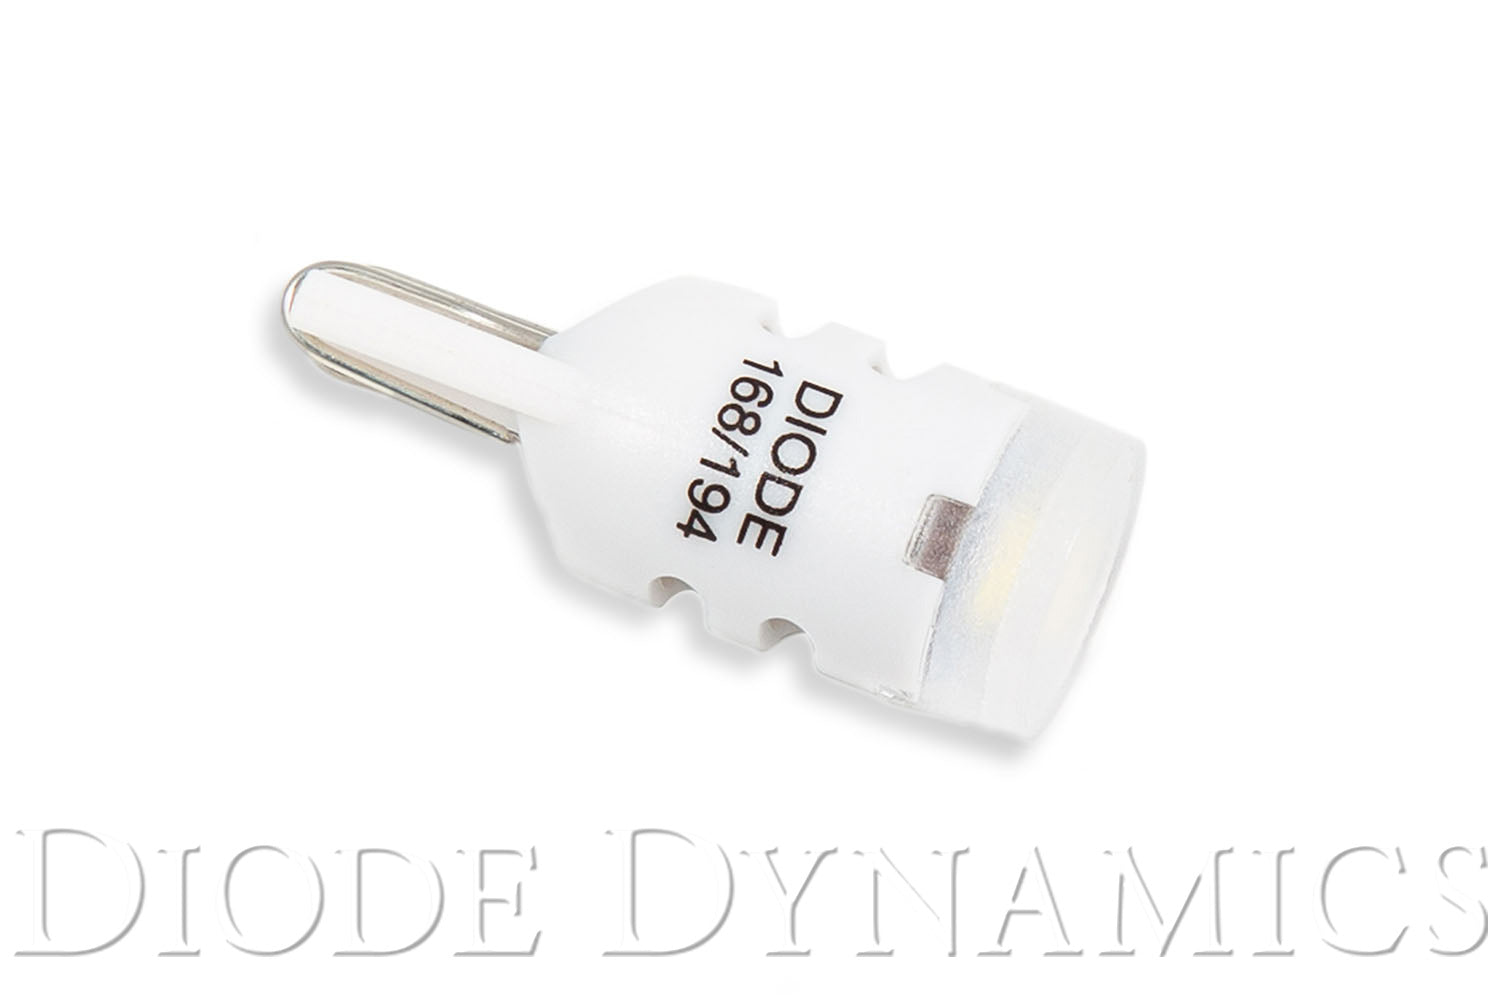 194 LED Bulb HP3 LED Cool White Single Diode Dynamics